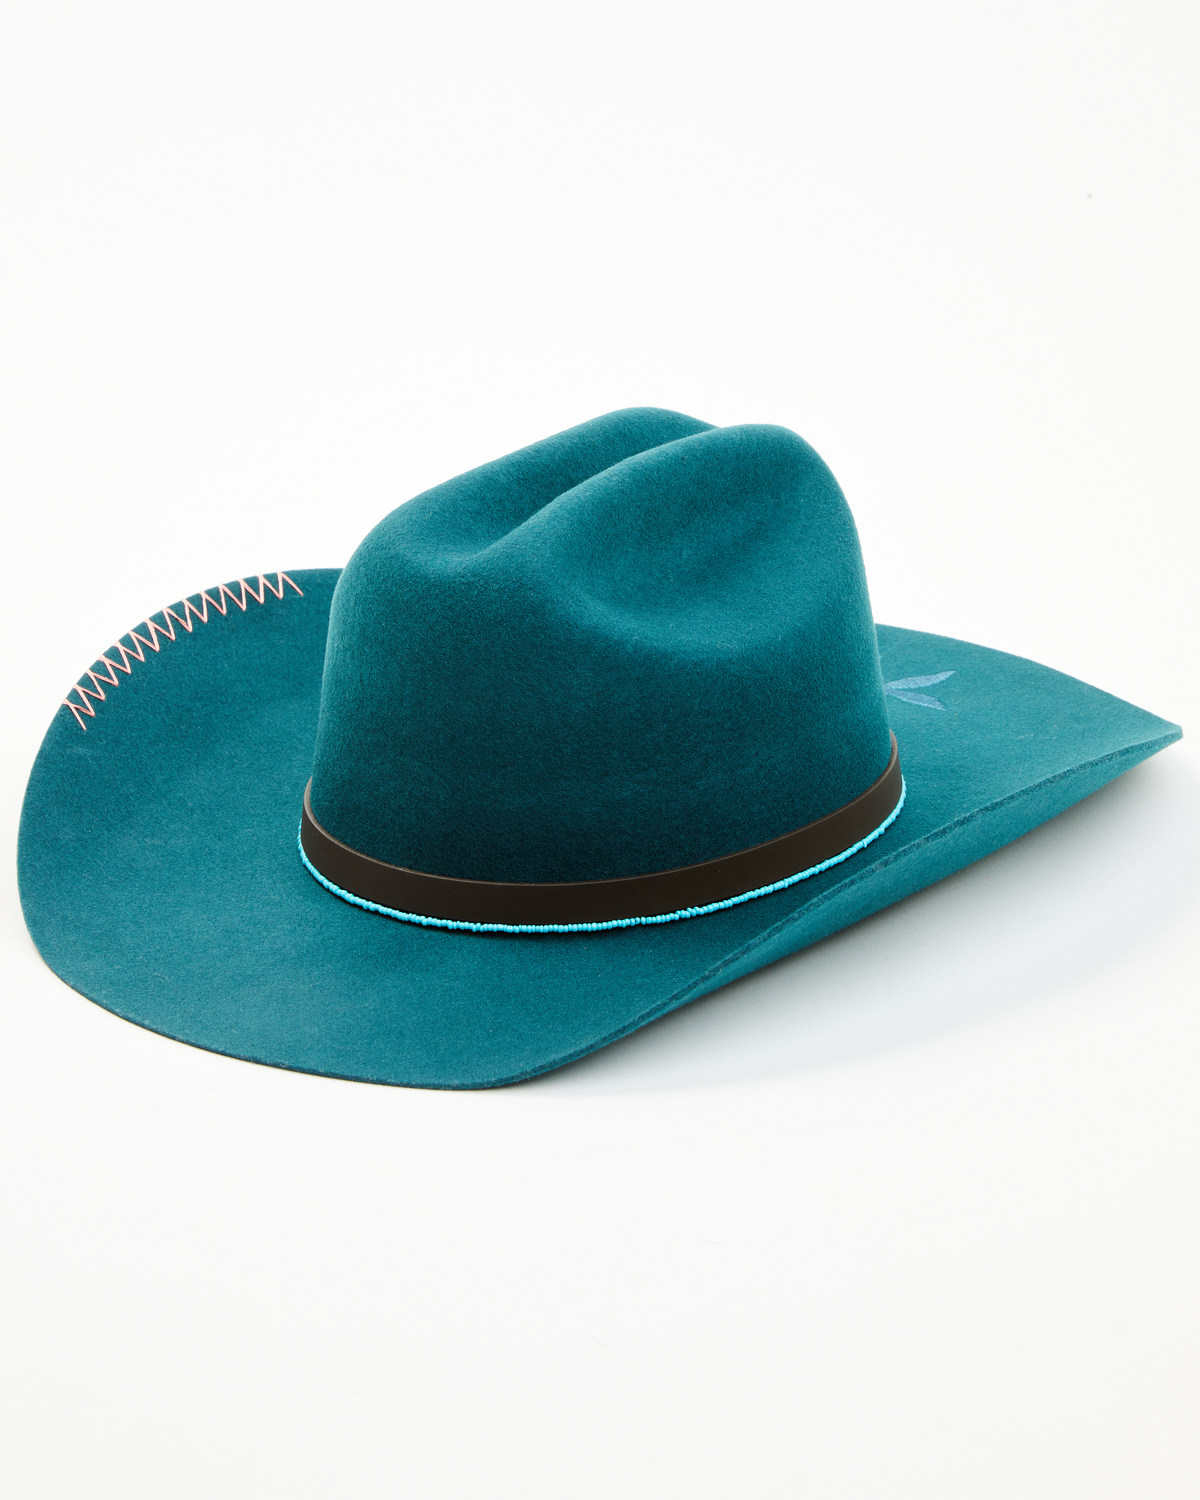 Shyanne Women's Mabel Embroidered Felt Cowboy Hat